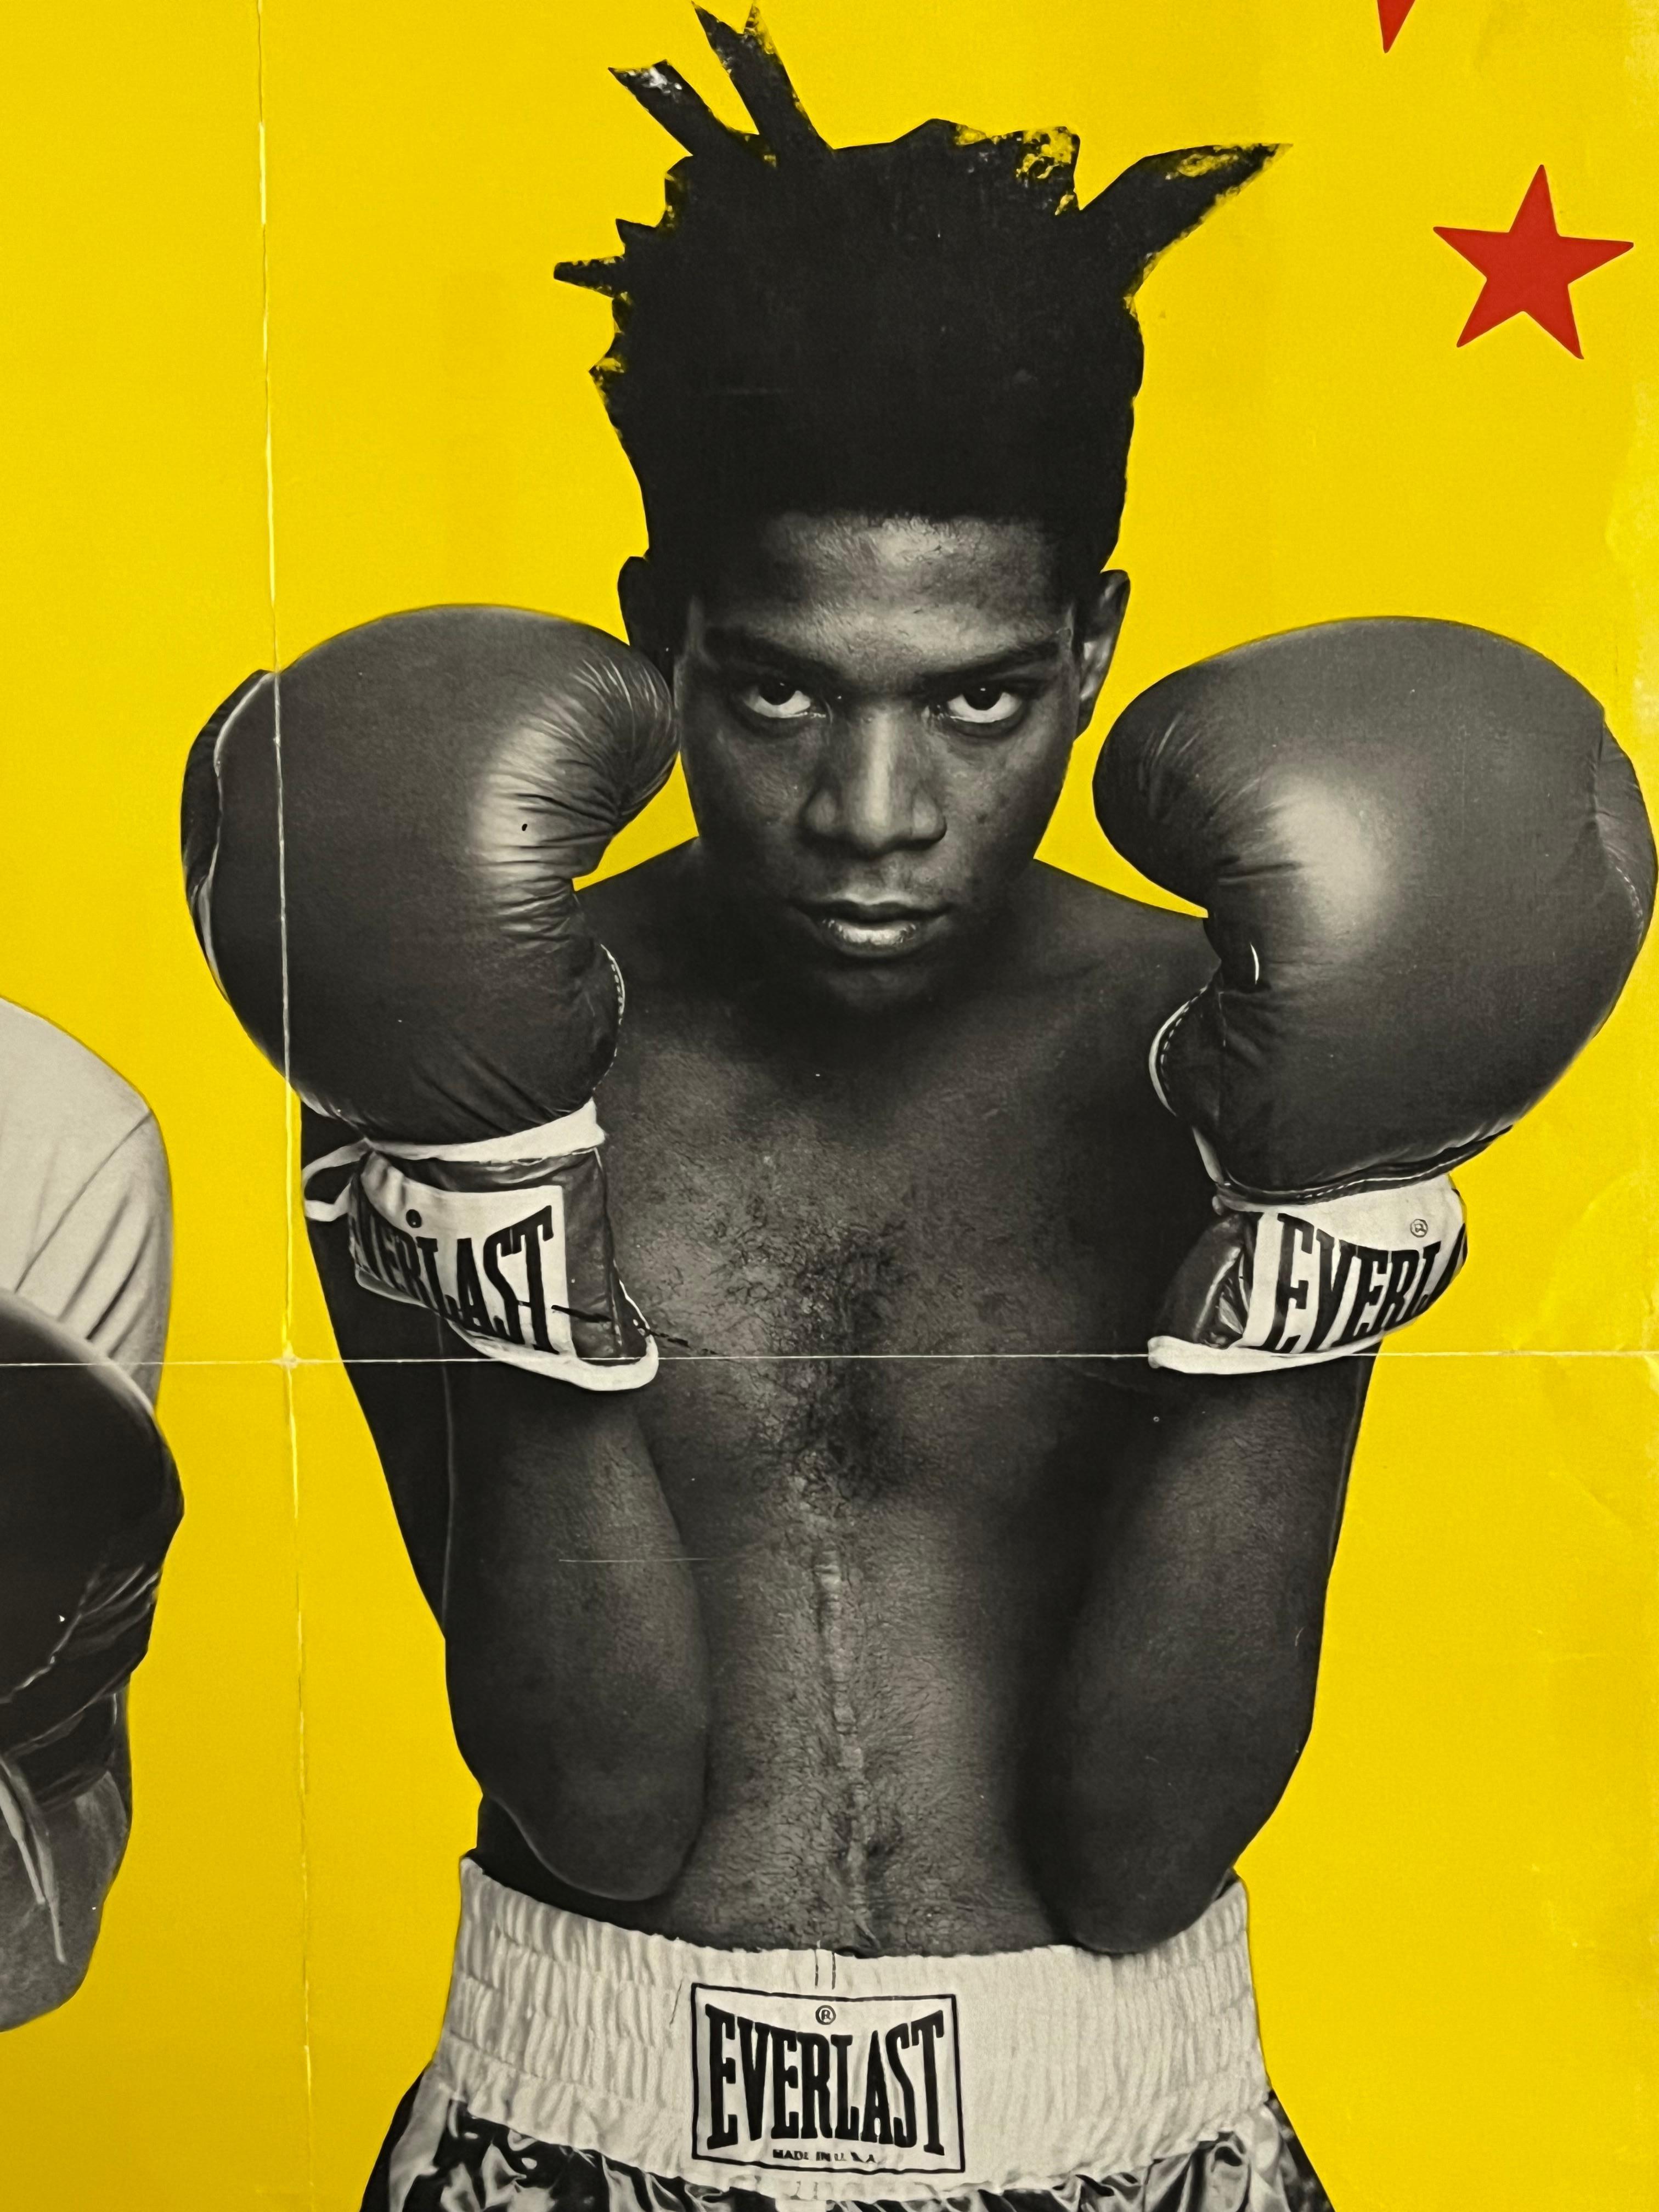 Warhol Basquiat Boxing Poster 1985 (Warhol Basquiat boxing 1985) - Pop Art Print by Michael Halsband